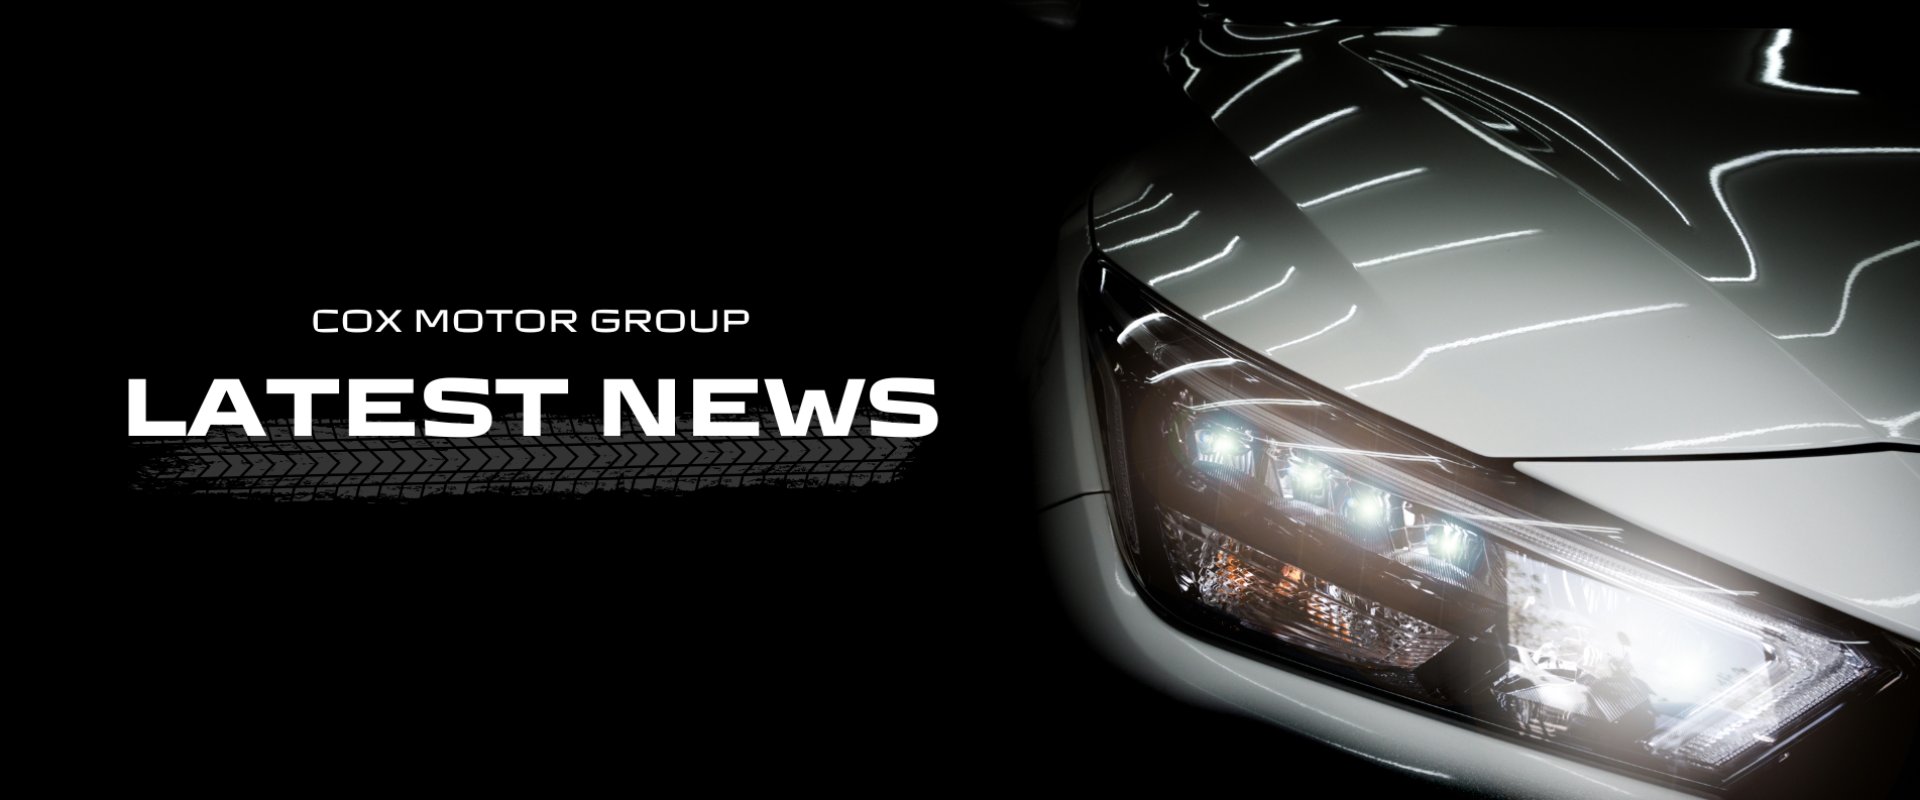 Cox Motor Group News